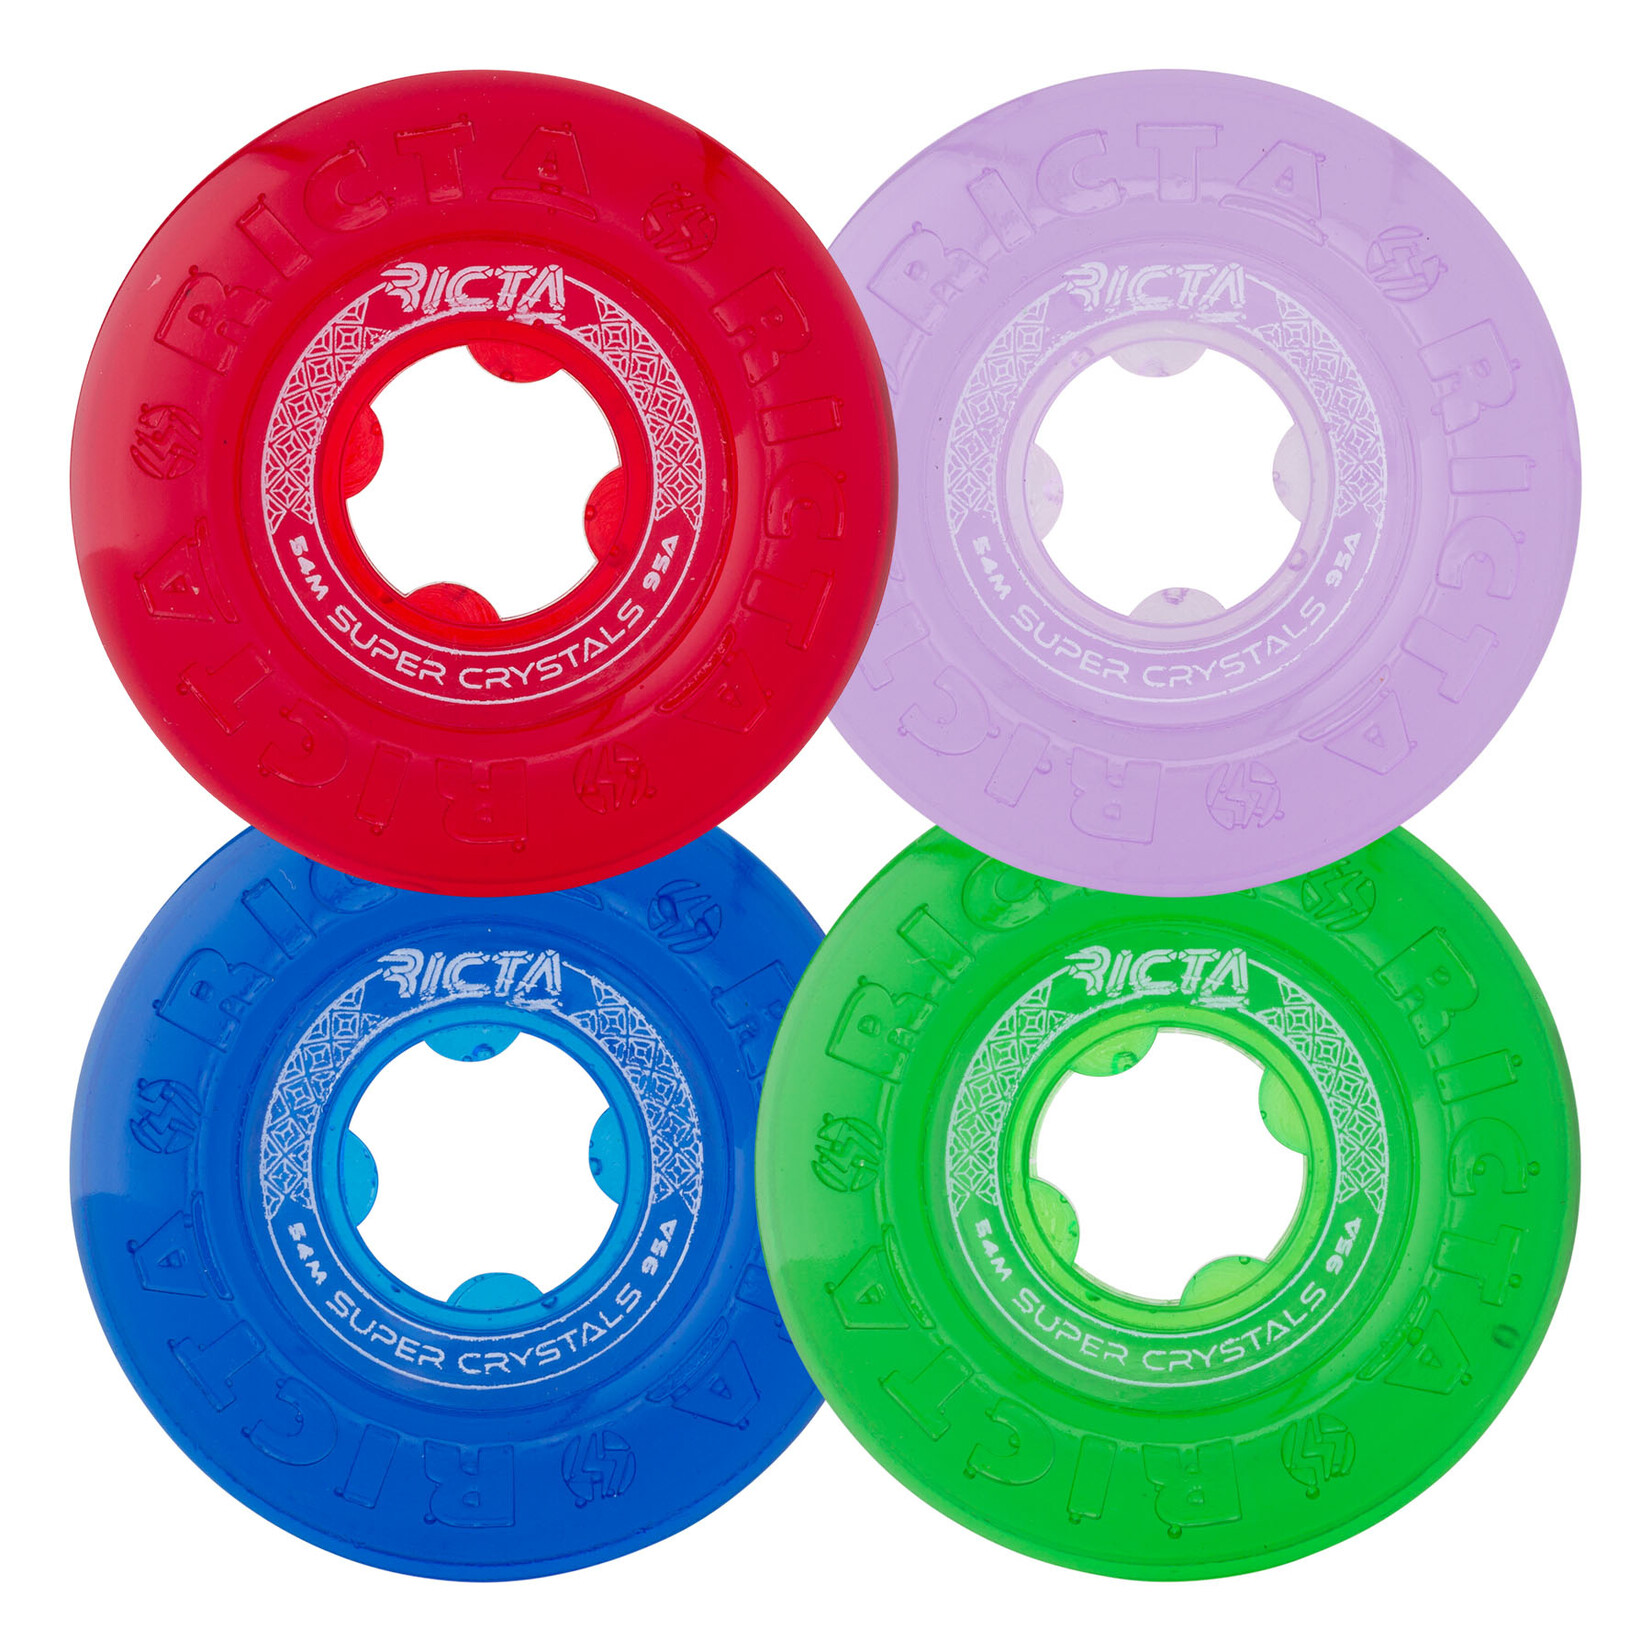 Ricta Ricta Super Crystals Multi Color 95a Skateboard Wheels - 54mm